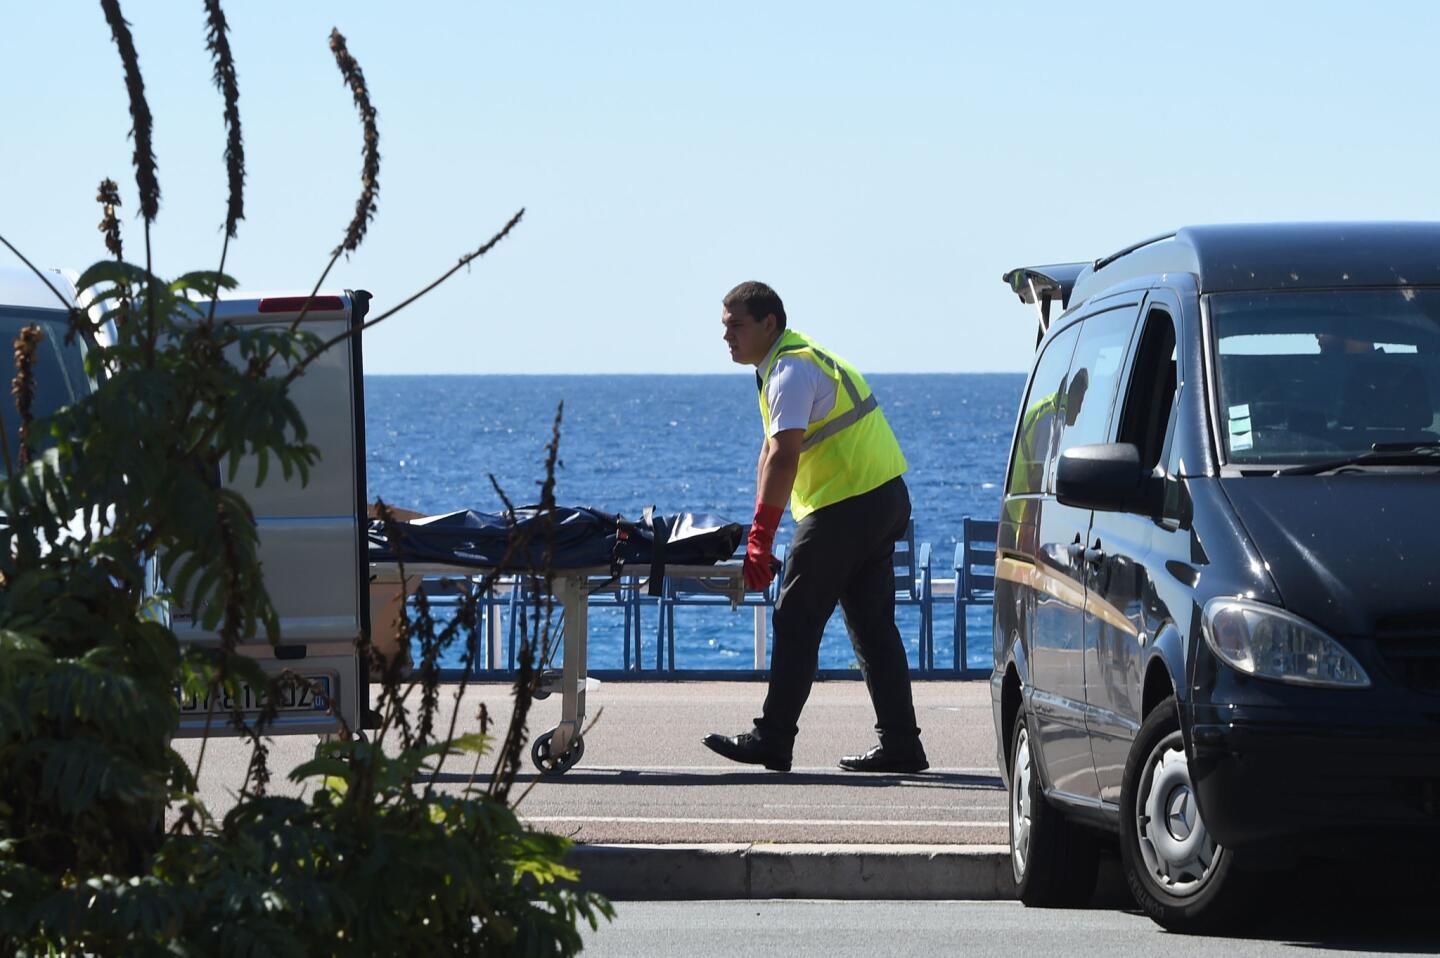 Attack in Nice, France